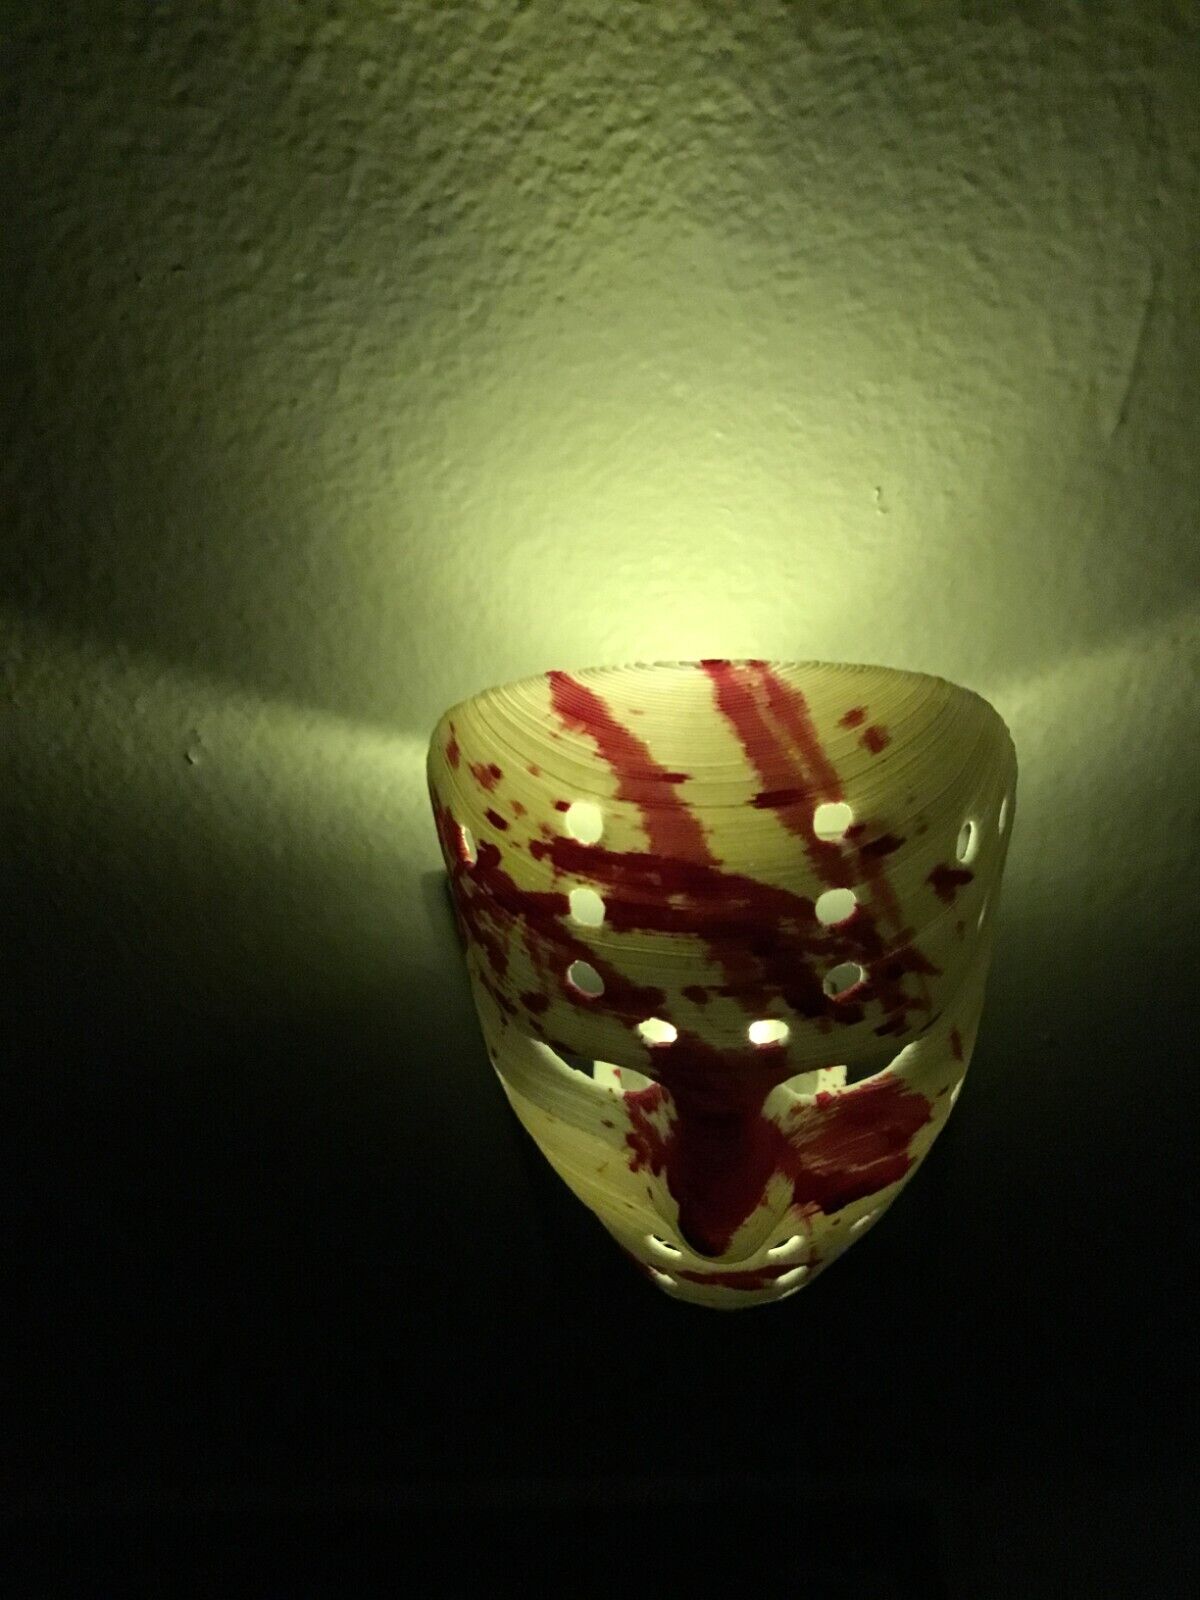 Jason Mask AUTO LED Plug in Night Light Lamp - Scary, Spooky, Horror, Gothic Fun